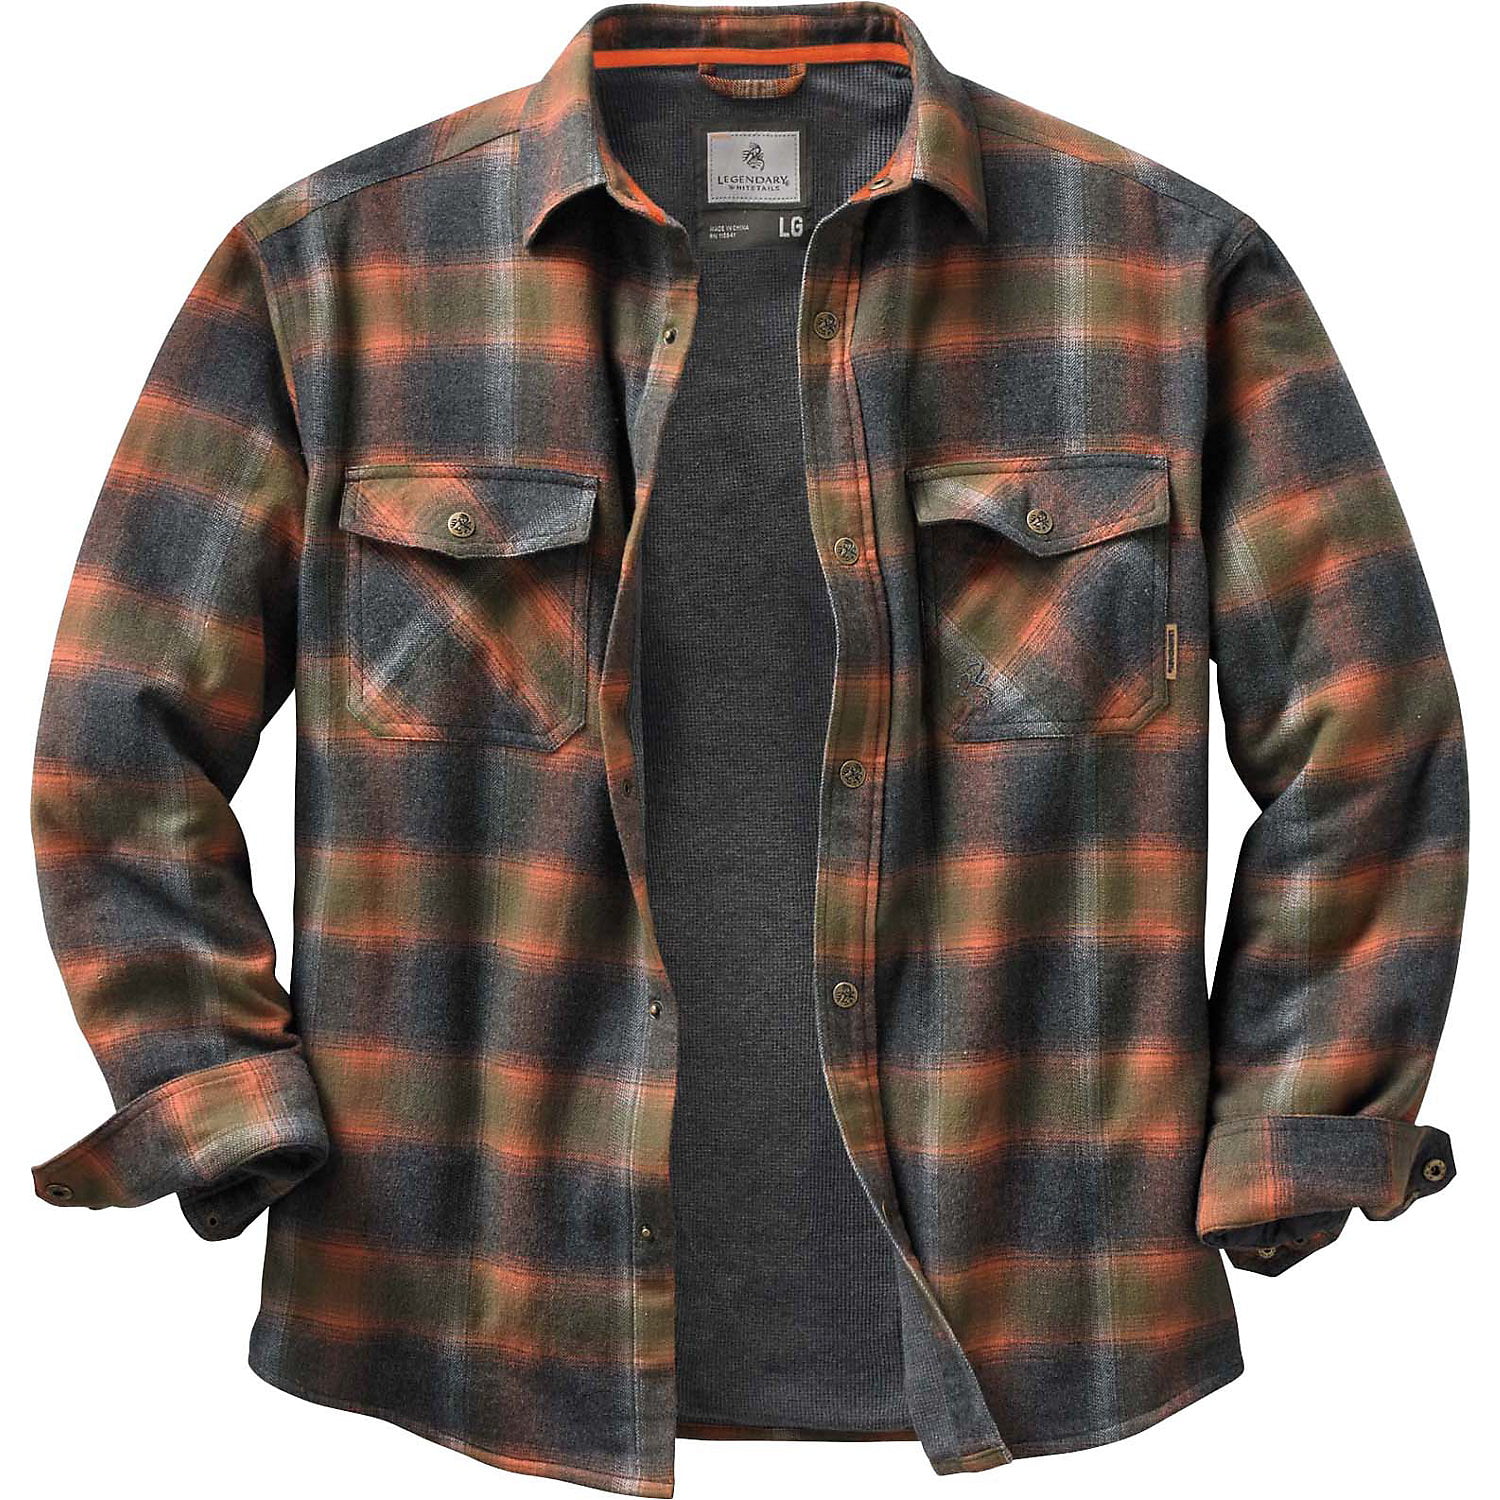 Legendary Whitetails Men's Archer Thermal Lined Shirt Jacket - Walmart.com